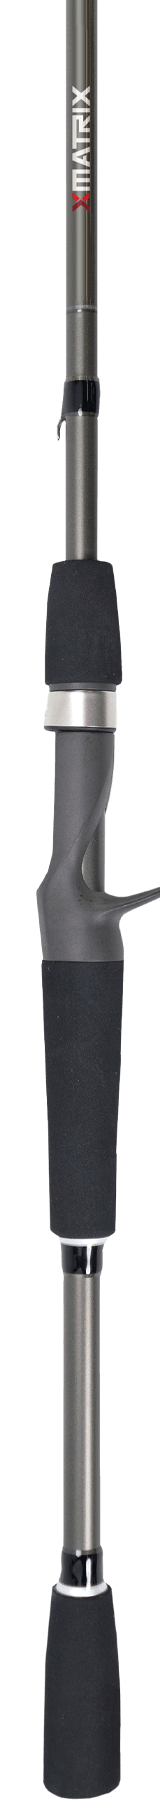 Douglas DXC Casting Rod · 7'0" · Medium light